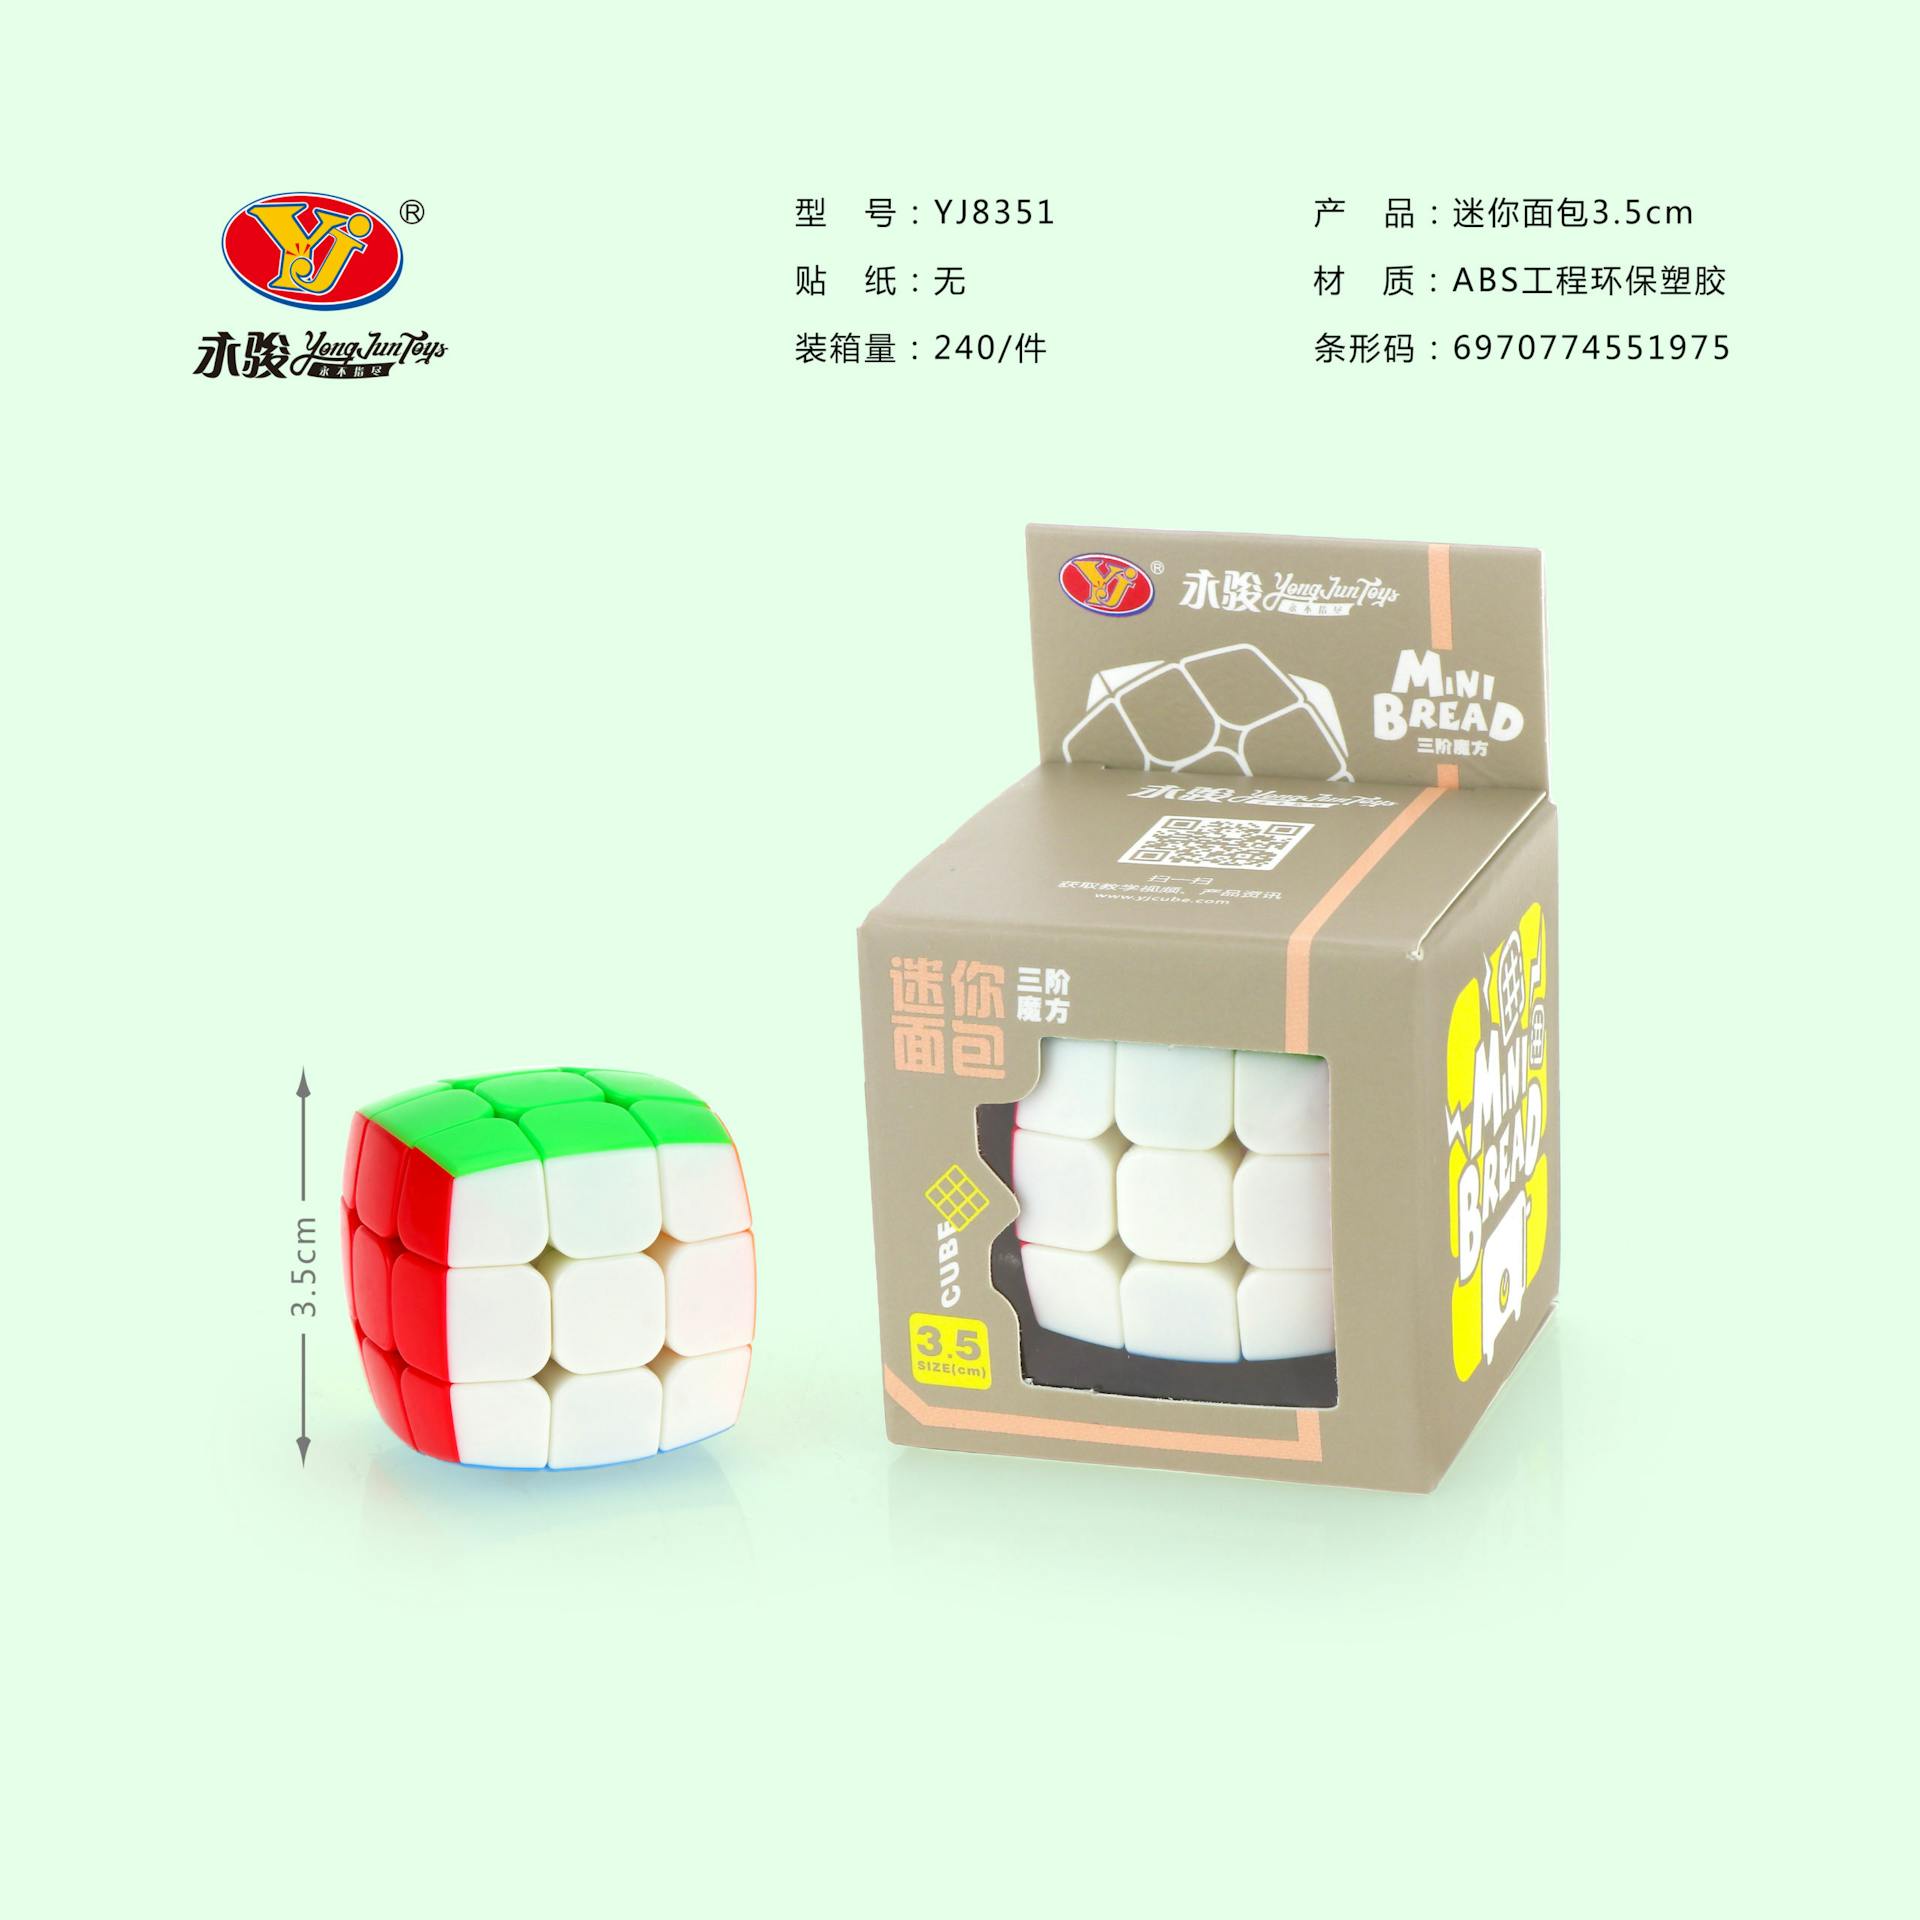 Yongjun 3.5cm pillowed 3x3x3 cube